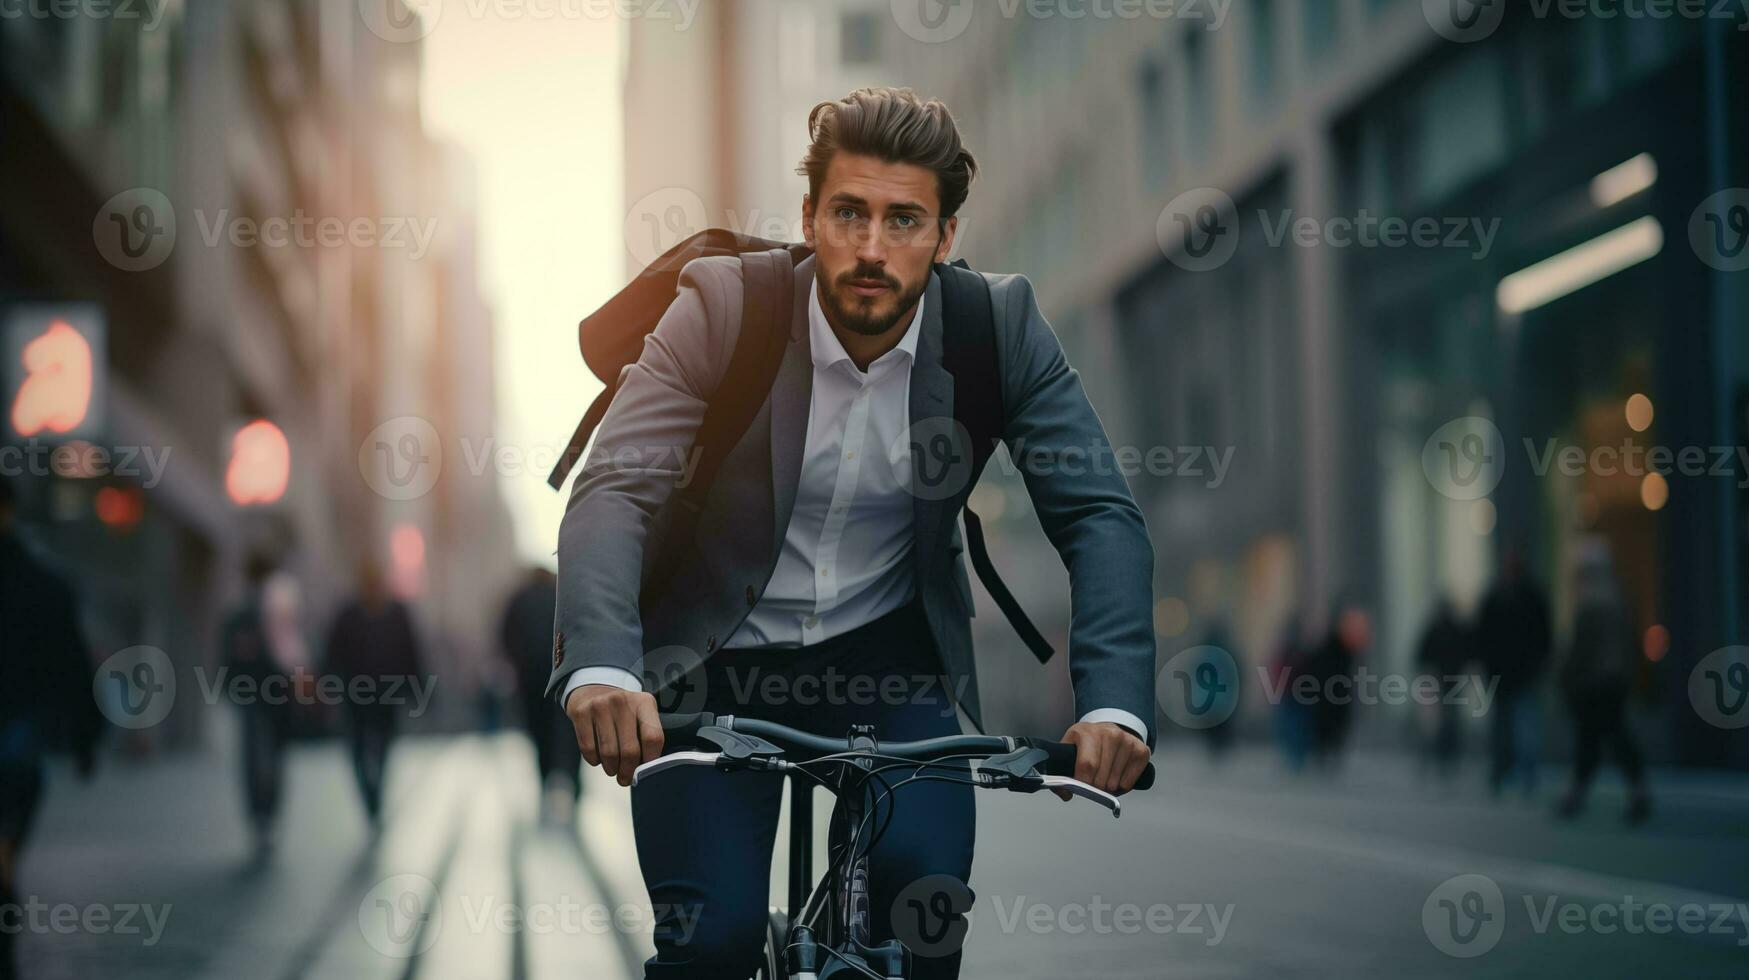 ai genererad en man i en kostym ridning en cykel ner en stad gata foto